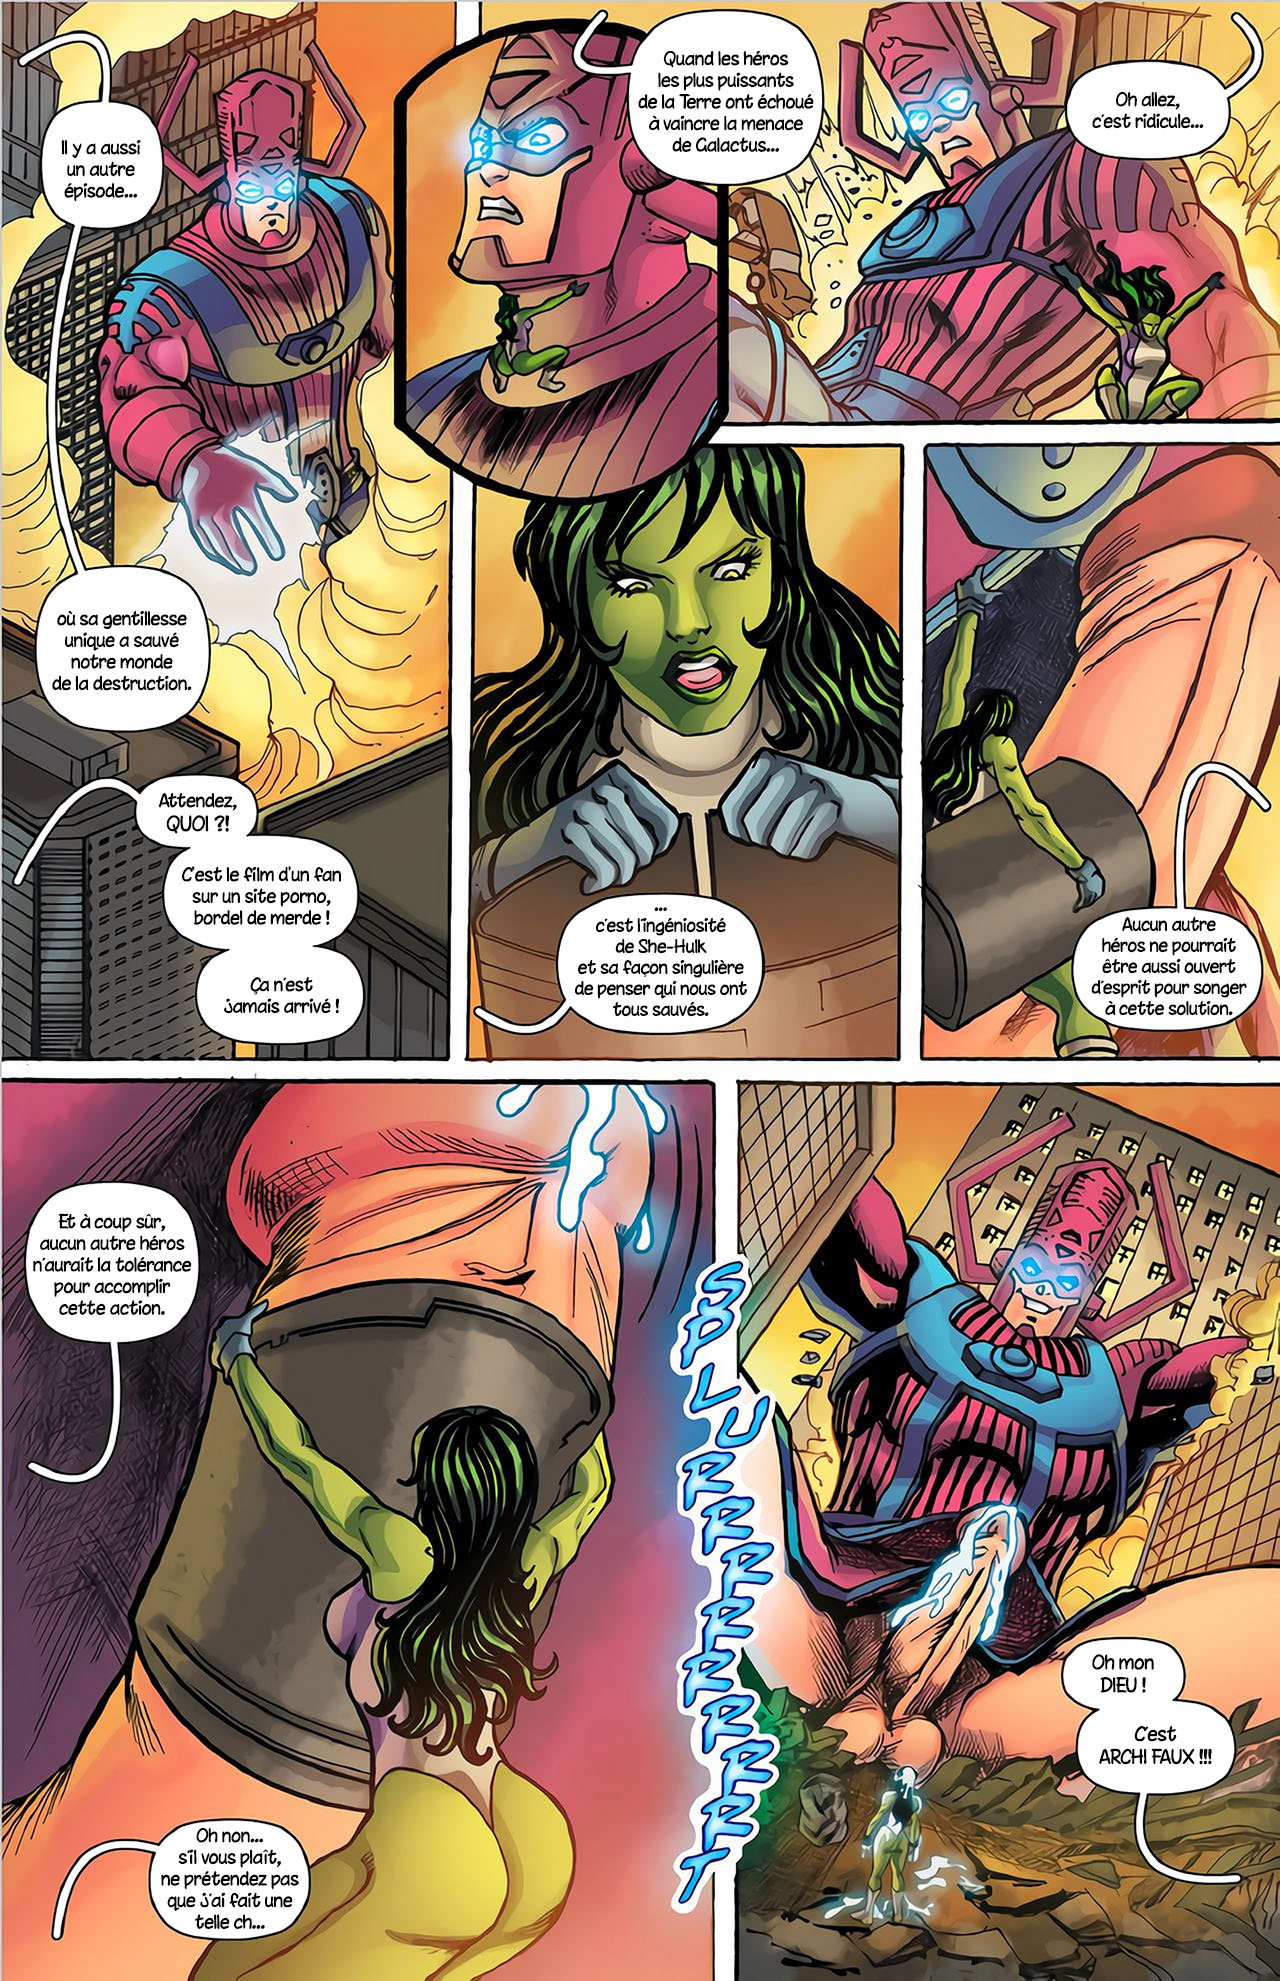 She-Hulk numero d'image 5